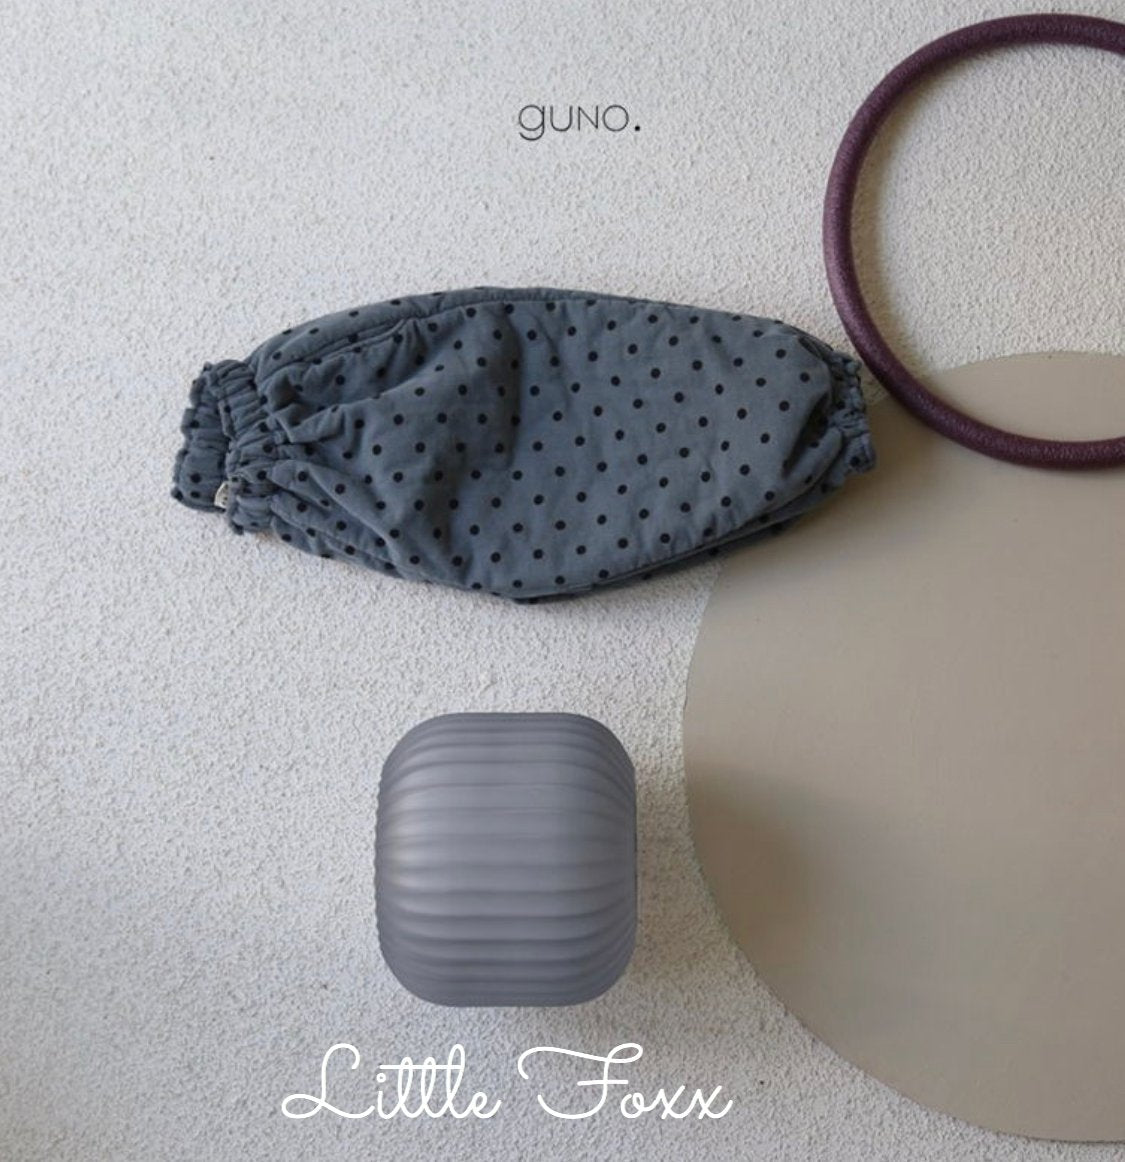 🅸🅽🆃🅴🆁🆅🅸🅴🆆 𝓌𝒾𝓉𝒽 𝒮𝓊𝓃-𝒜 𝒥𝒾𝓃 𝒞ℰ𝒪 𝒶𝓃𝒹 𝒟𝑒𝓈𝒾𝑔𝓃𝑒𝓇 𝑜𝒻 Guno & ℒ'𝑒𝒶𝓊 - Little Foxx Concept Store